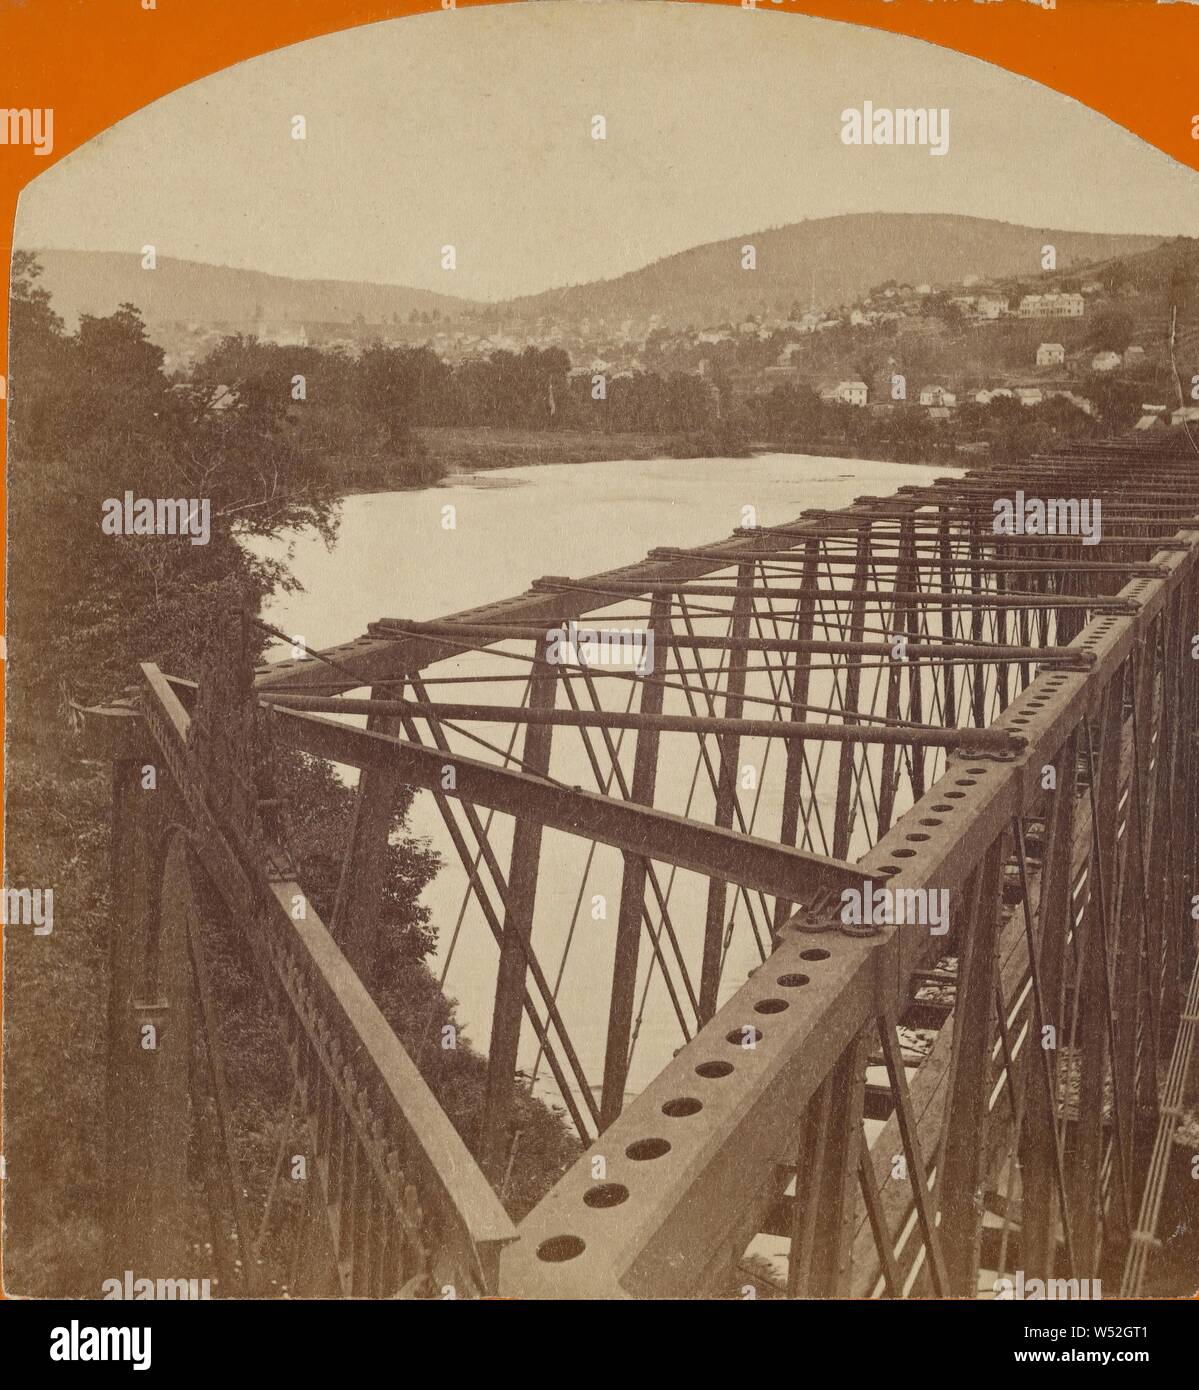 Susquehanna, Pa., and the Iron Bridge., L. E. Walker (American, 1826 - 1916, active Warsaw, New York), about 1870, Albumen silver print Stock Photo